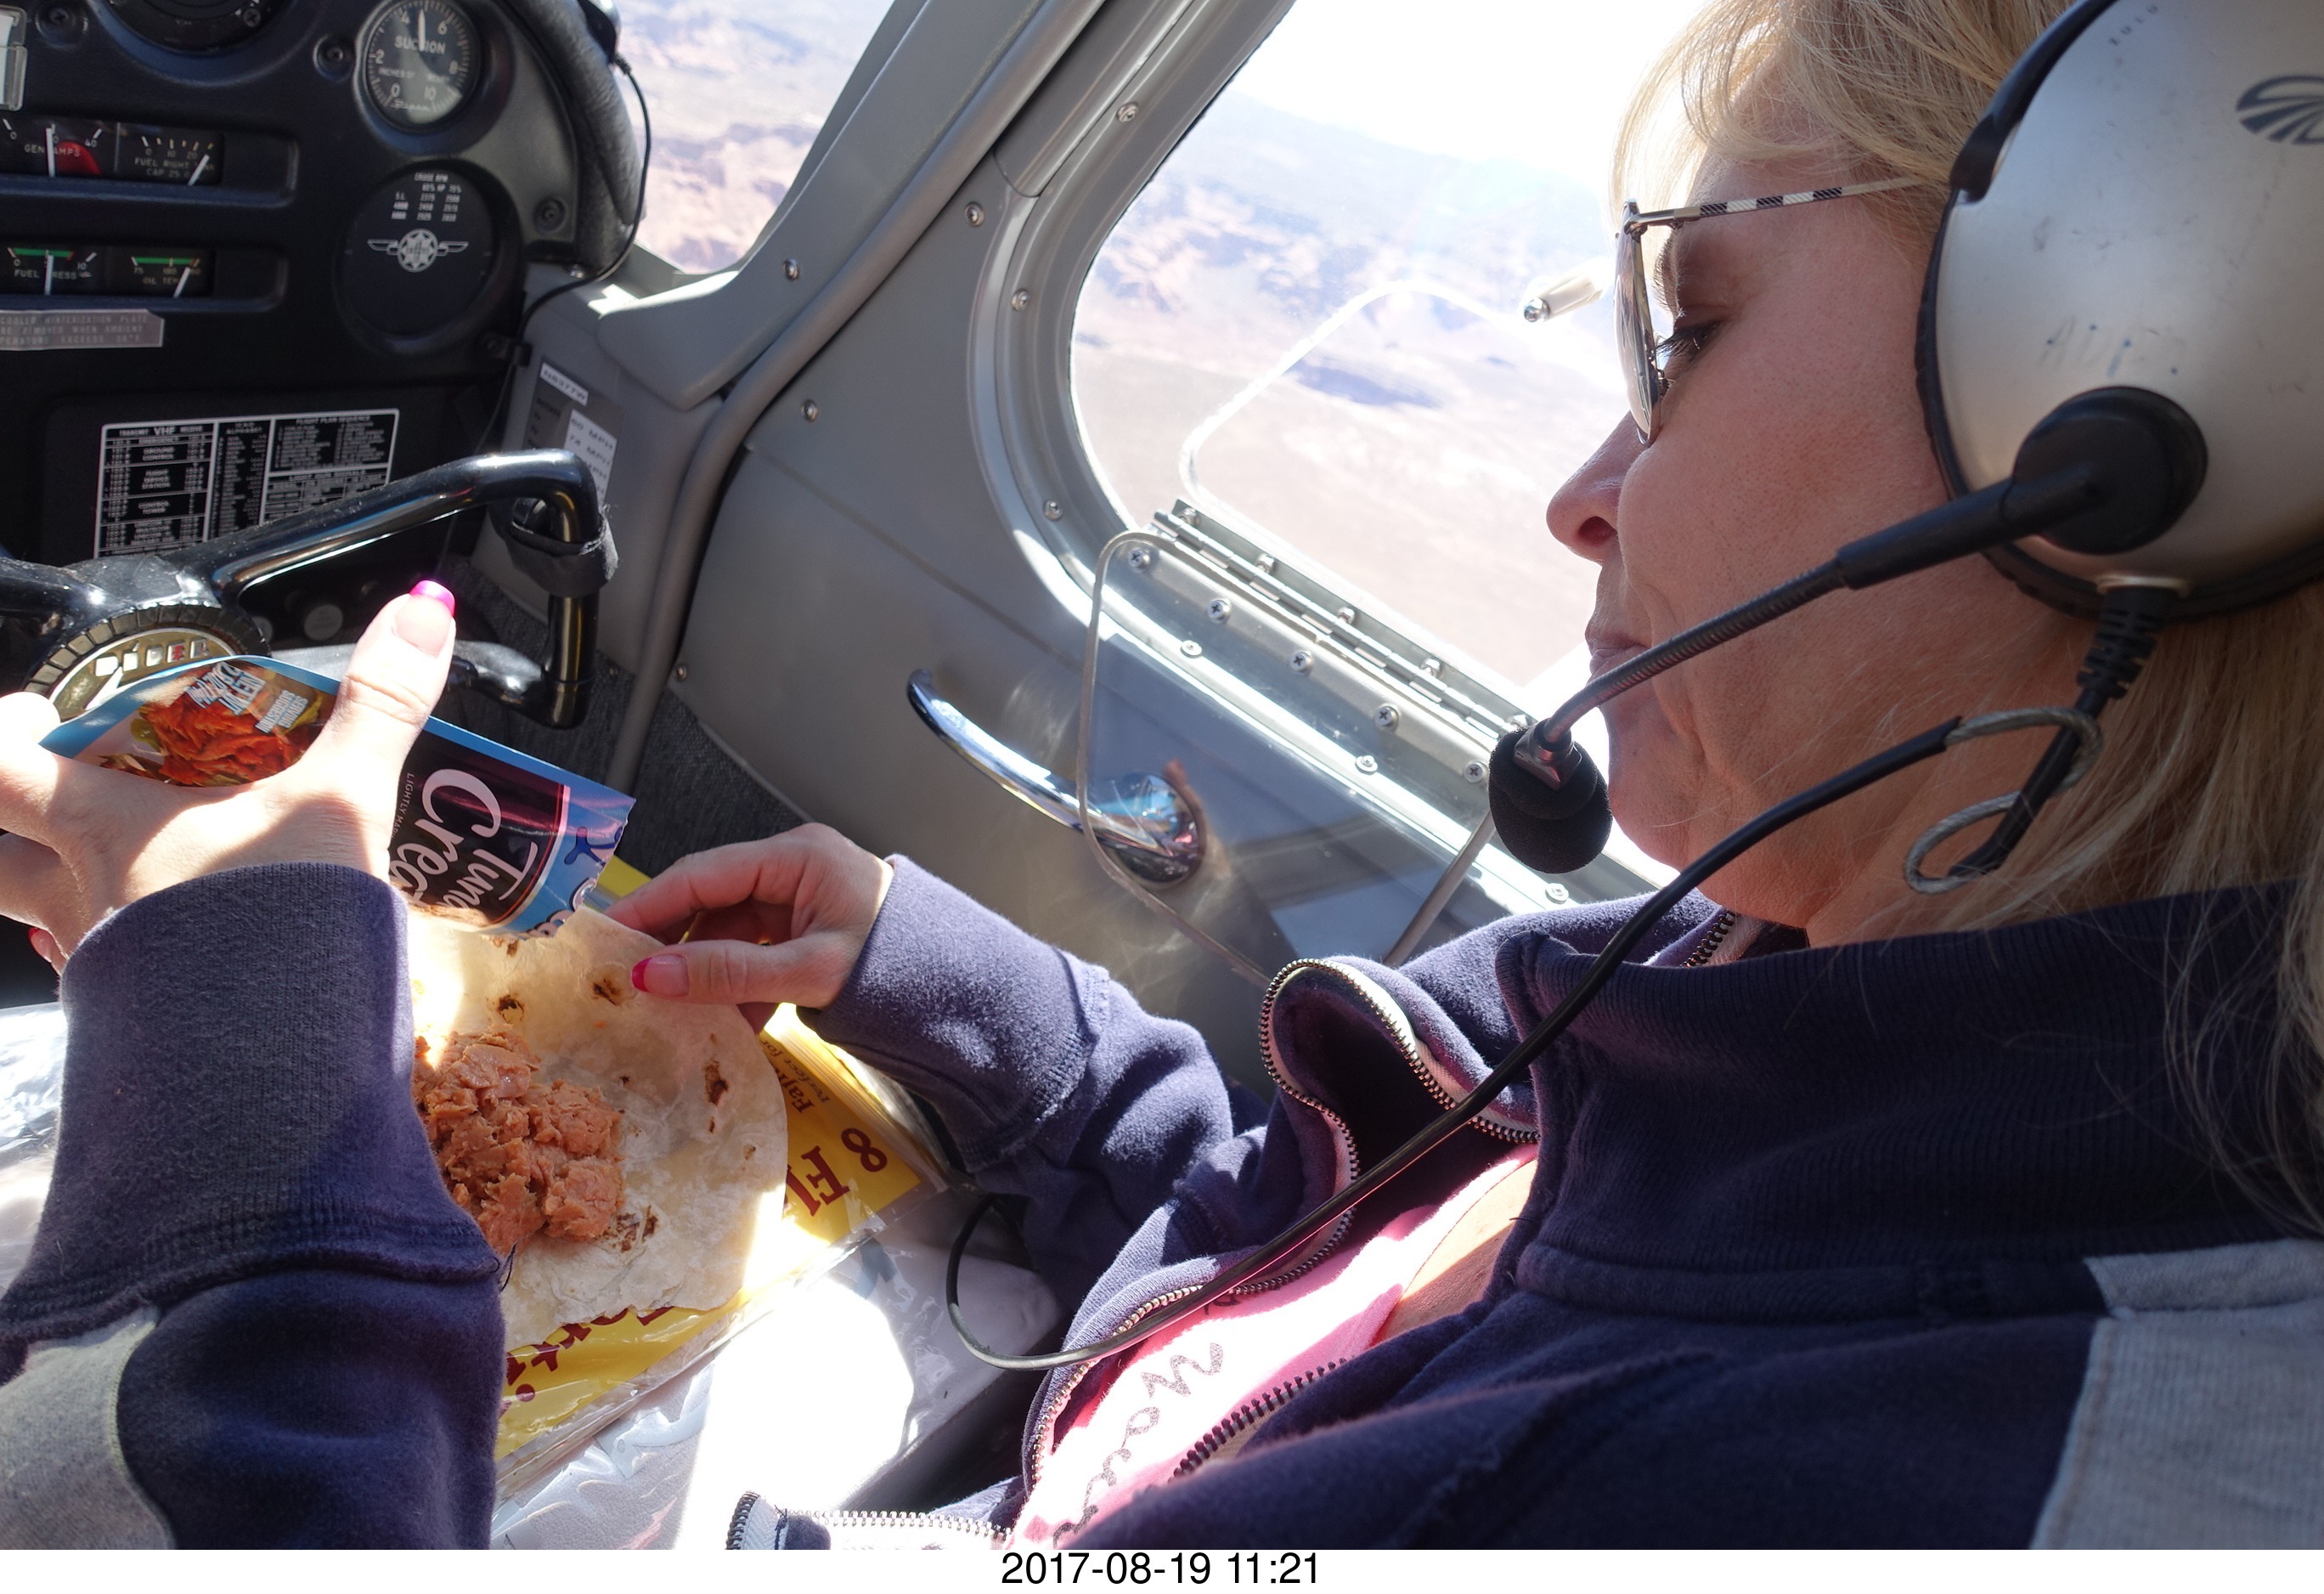 Kim preparing her in-flight meal